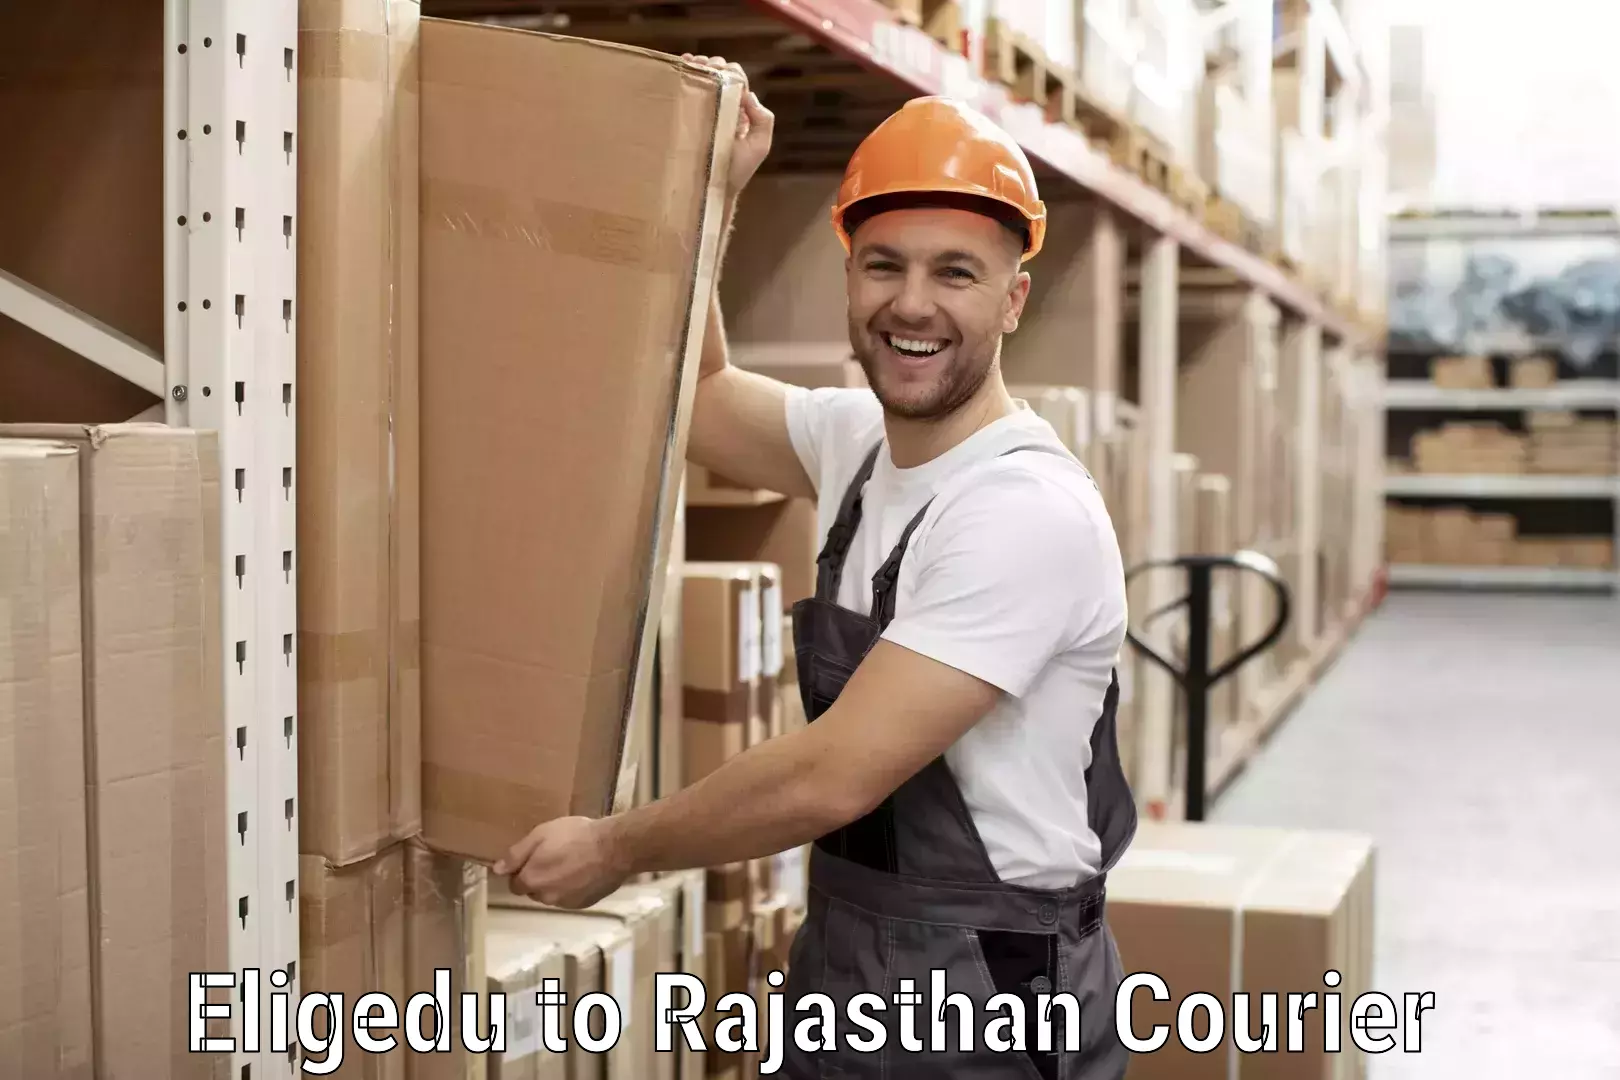 Doorstep delivery service Eligedu to Rajasthan